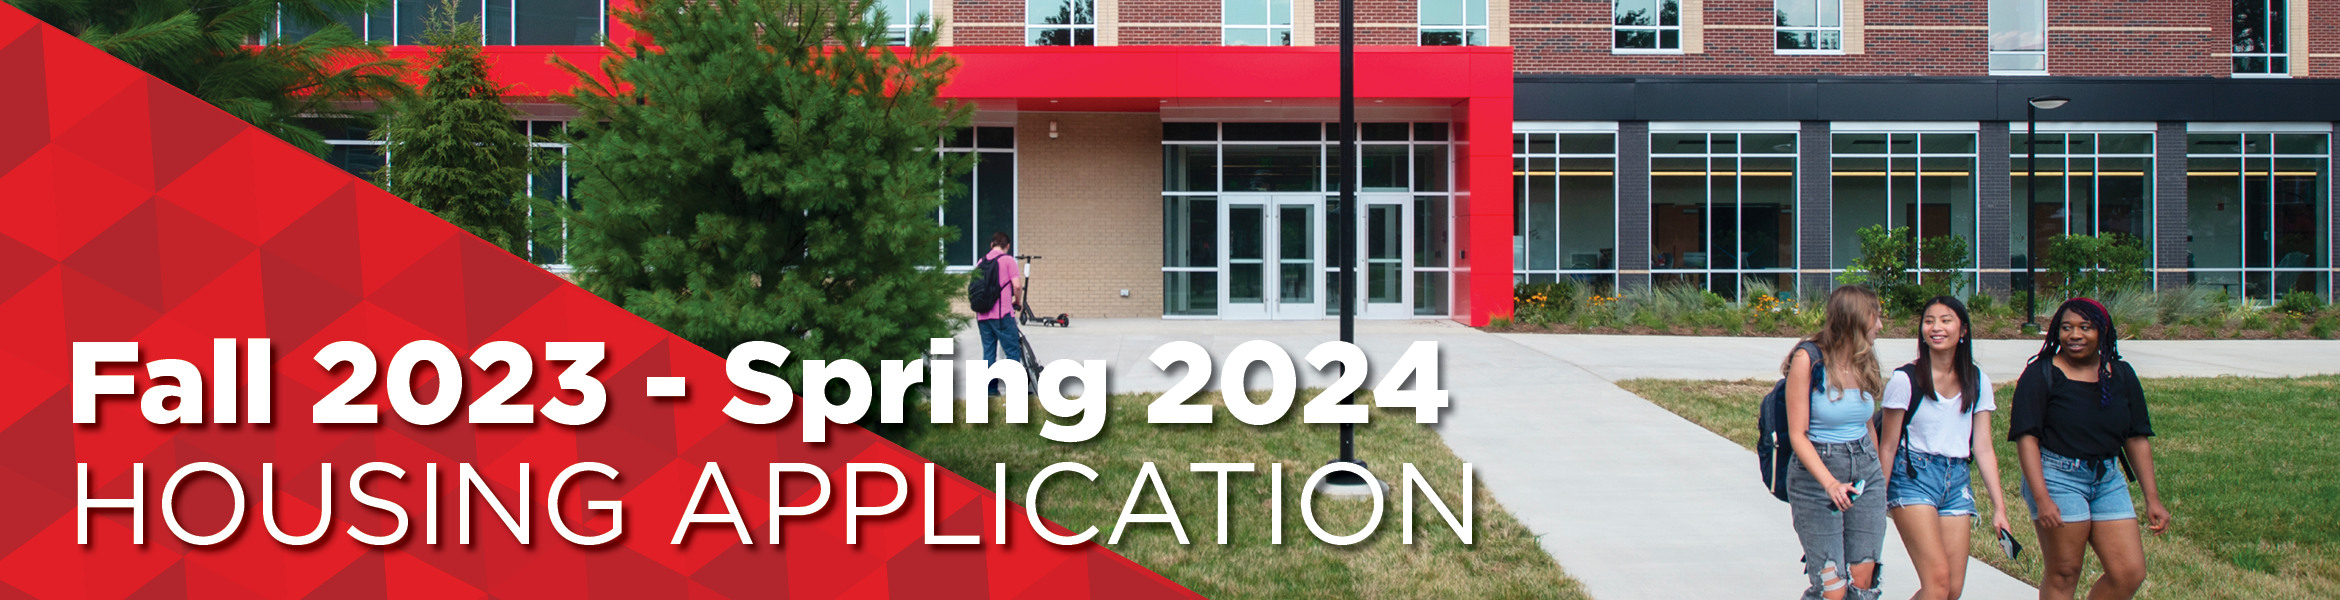 fall 2023-spring 2024 housing application